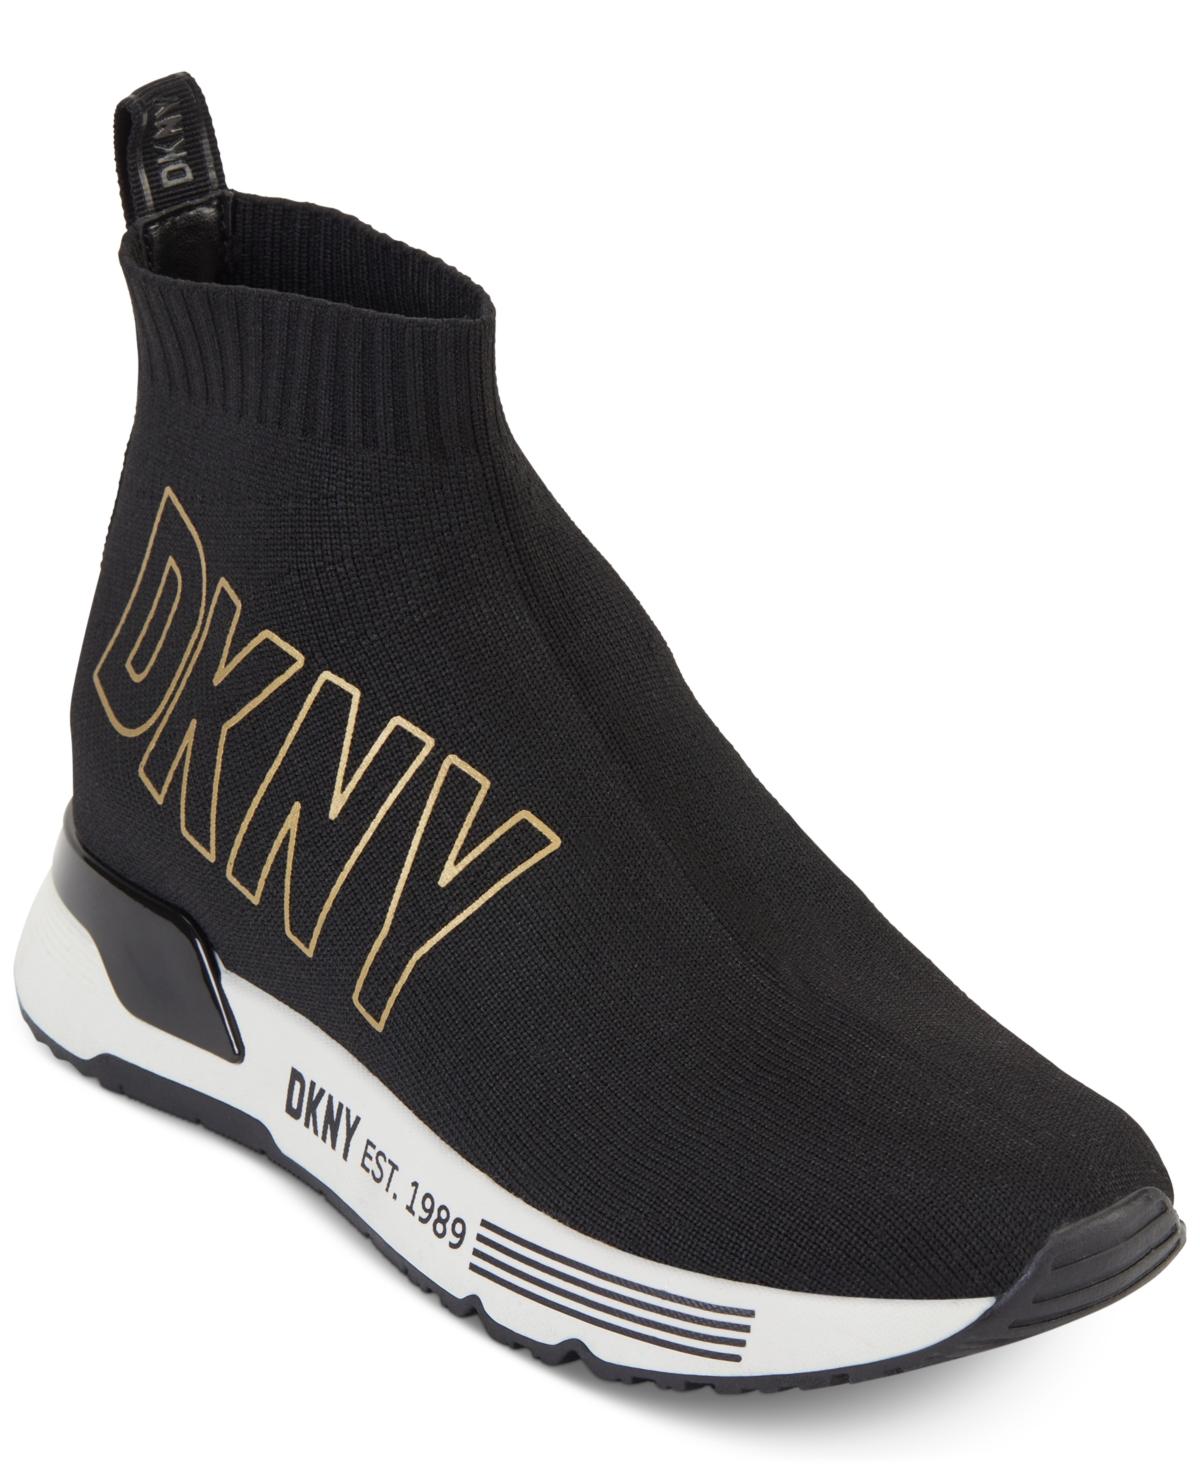 DKNY Nona Sock Sneakers in Black | Lyst